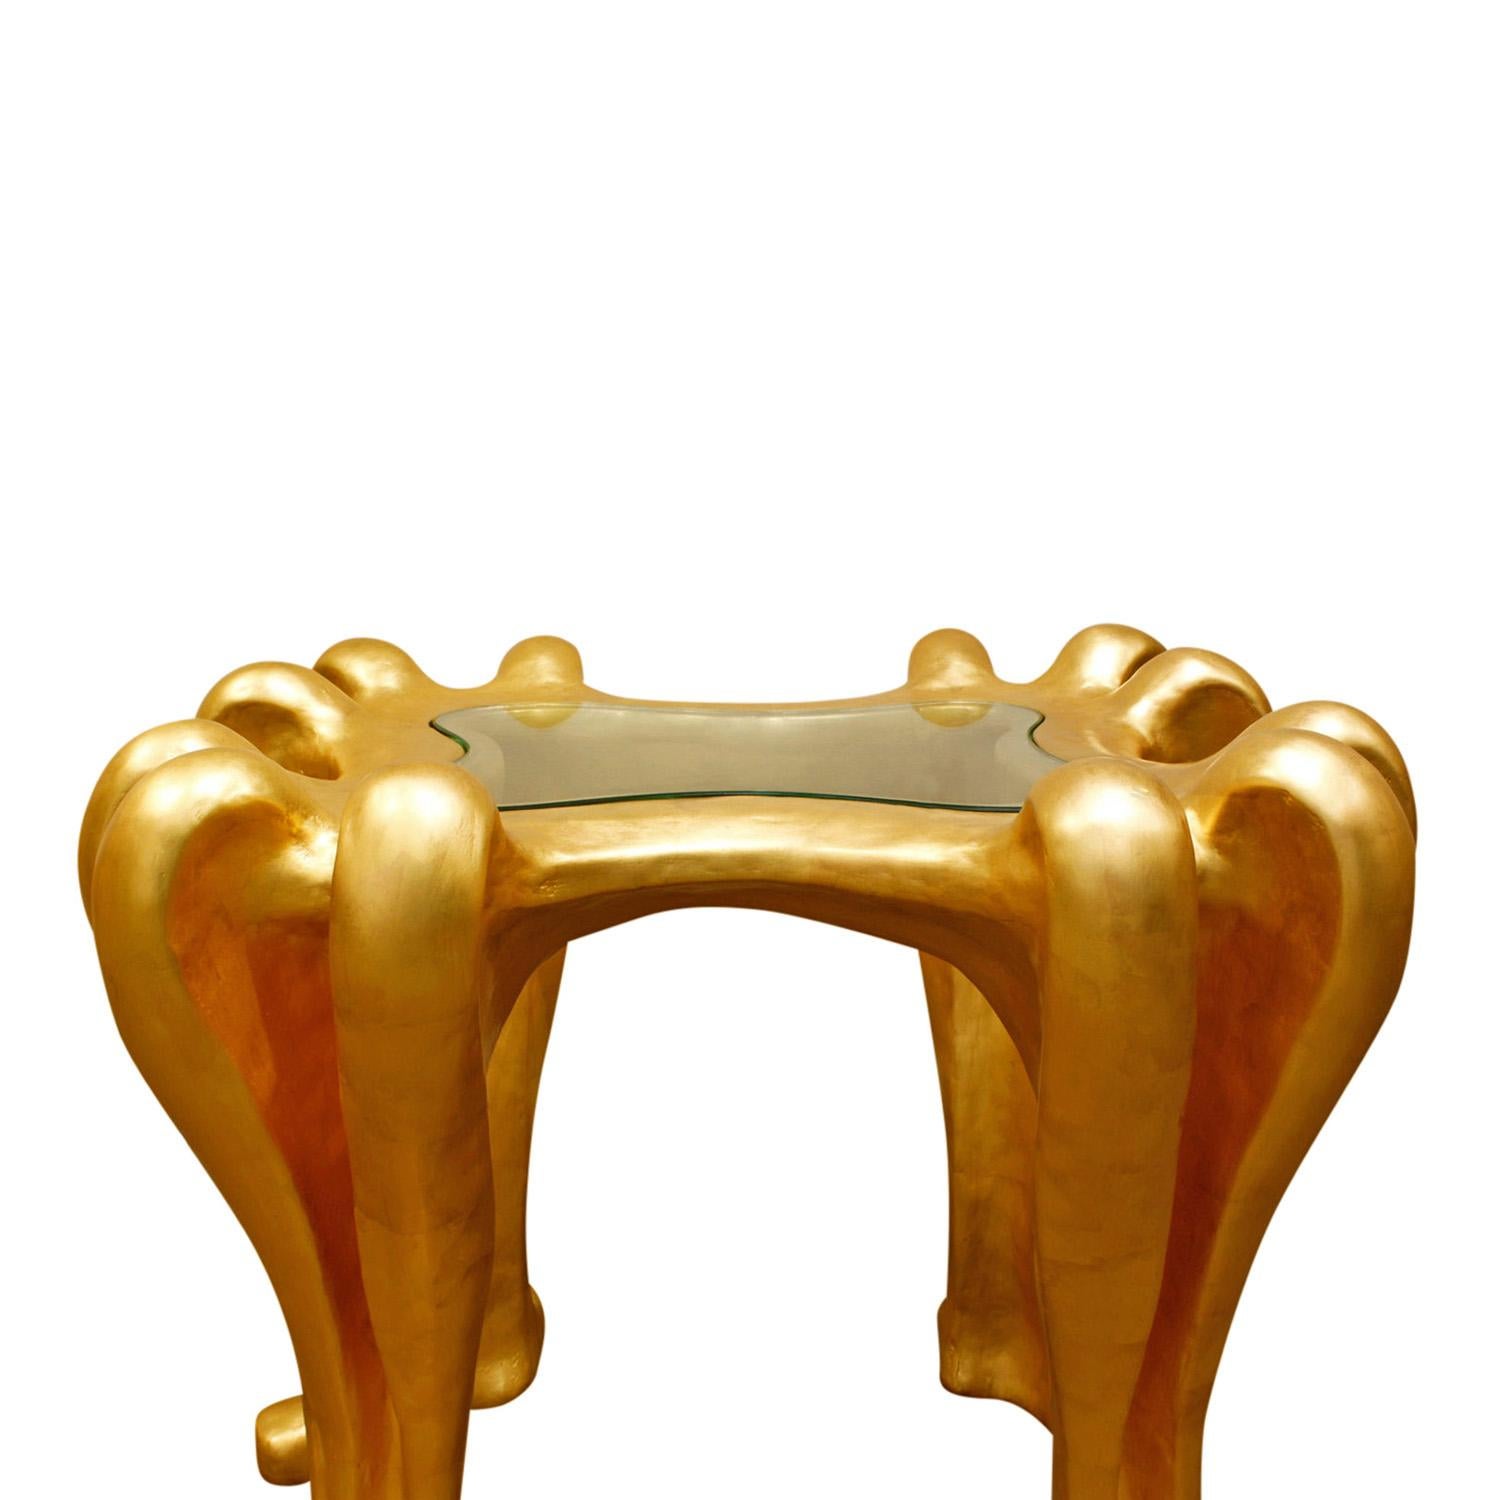 Hand-Crafted Lawrence De Martino Sculptural Side Table in 24-Karat Gold Leaf, 2000